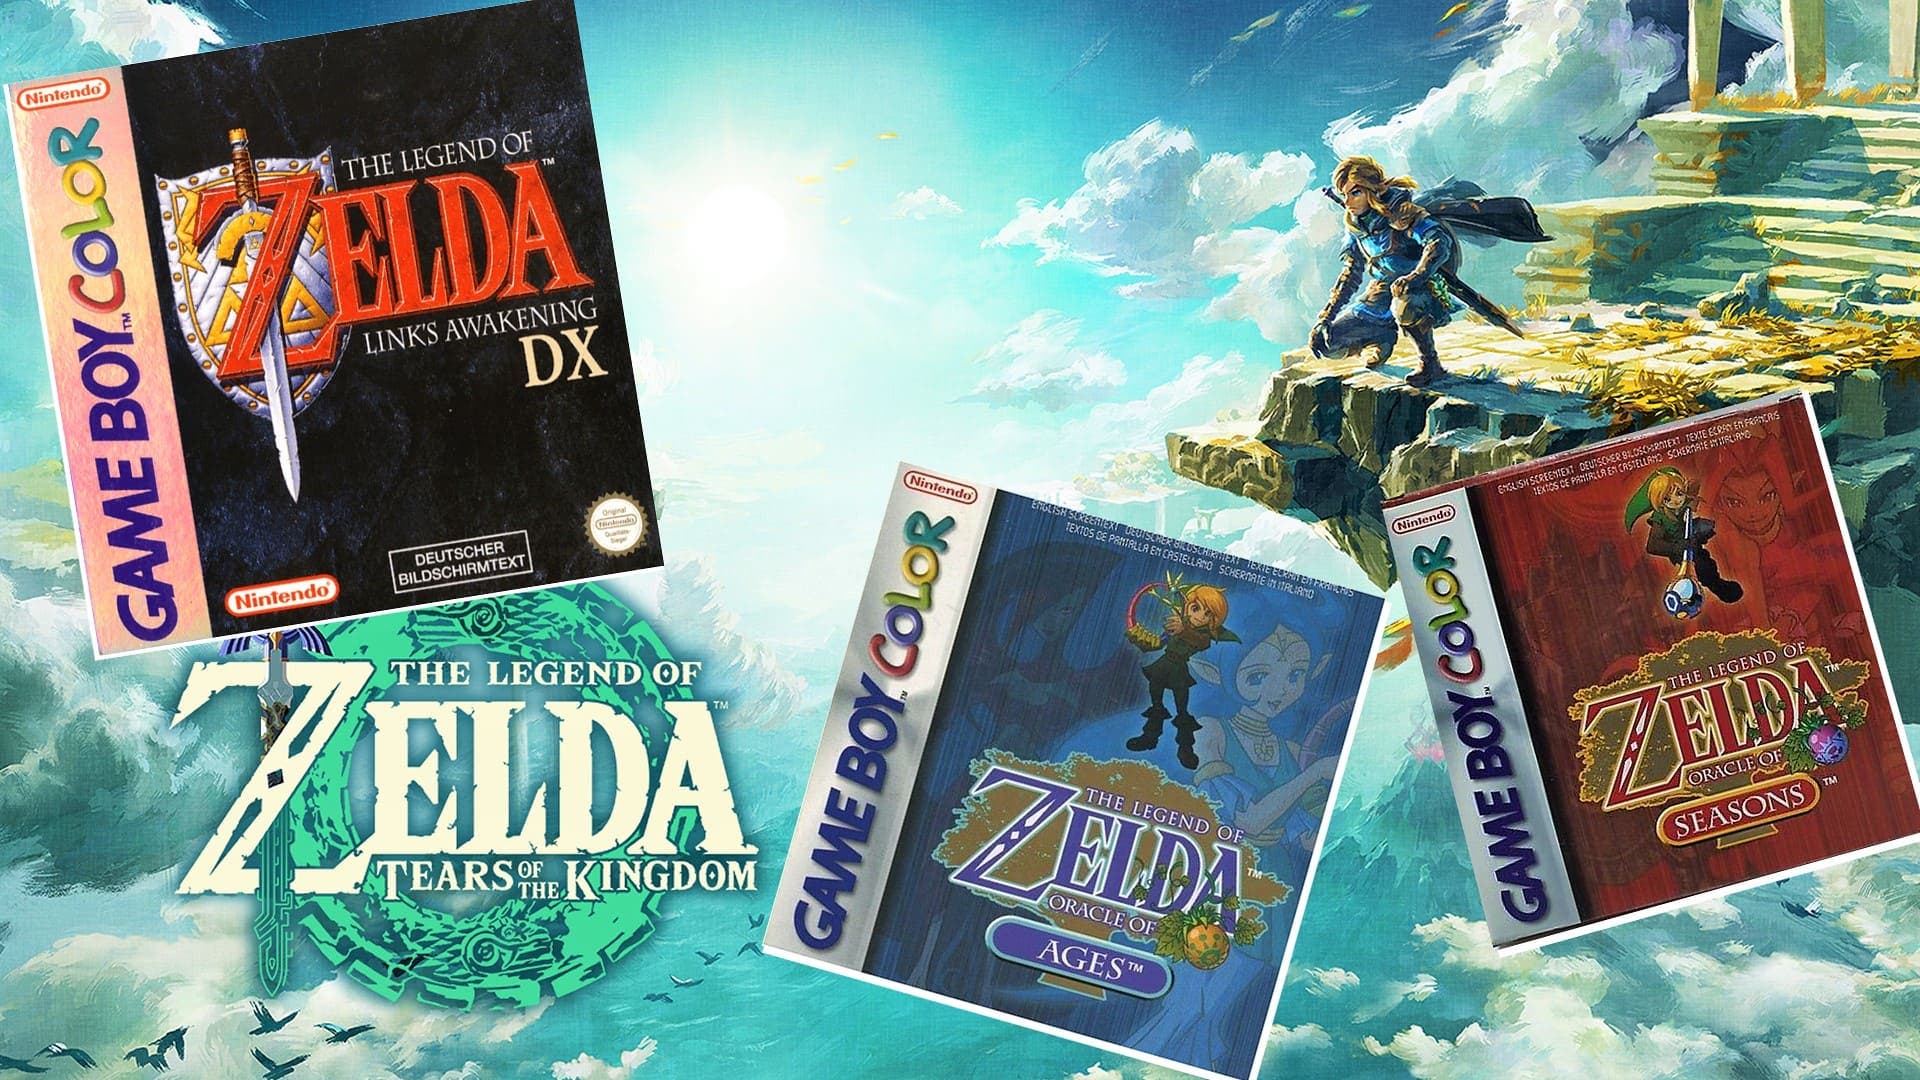  The Legend of Zelda: Link's Awakening DX : Nintendo Game Boy  Color: Videojuegos